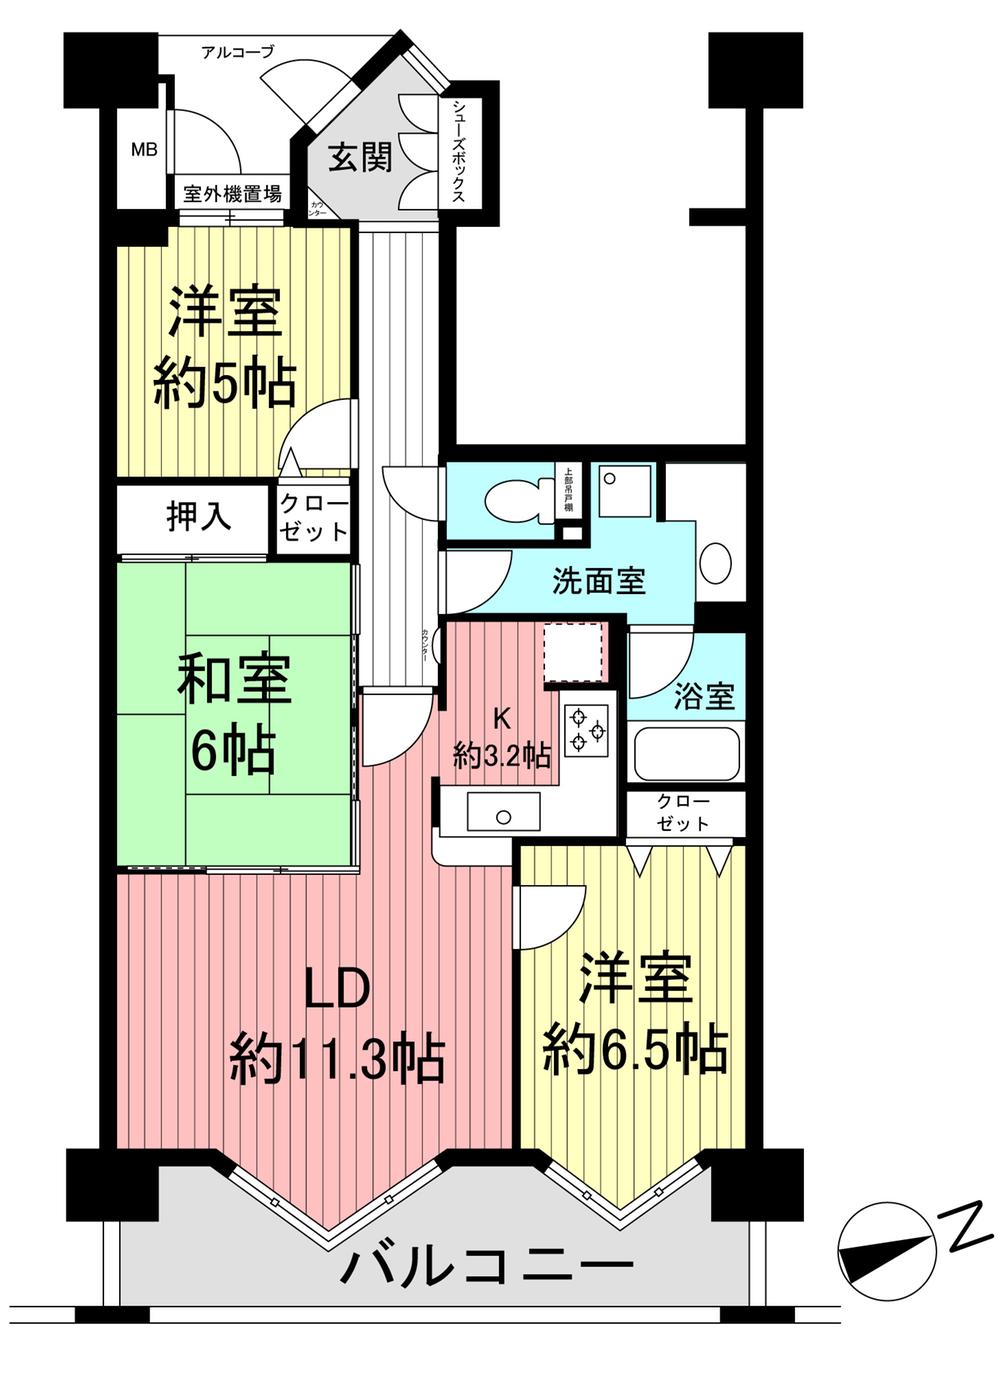 Floor plan. 3LDK, Price 30,900,000 yen, Occupied area 74.18 sq m , Balcony area 11.5 sq m 3LDK ・ 74.18 sq m